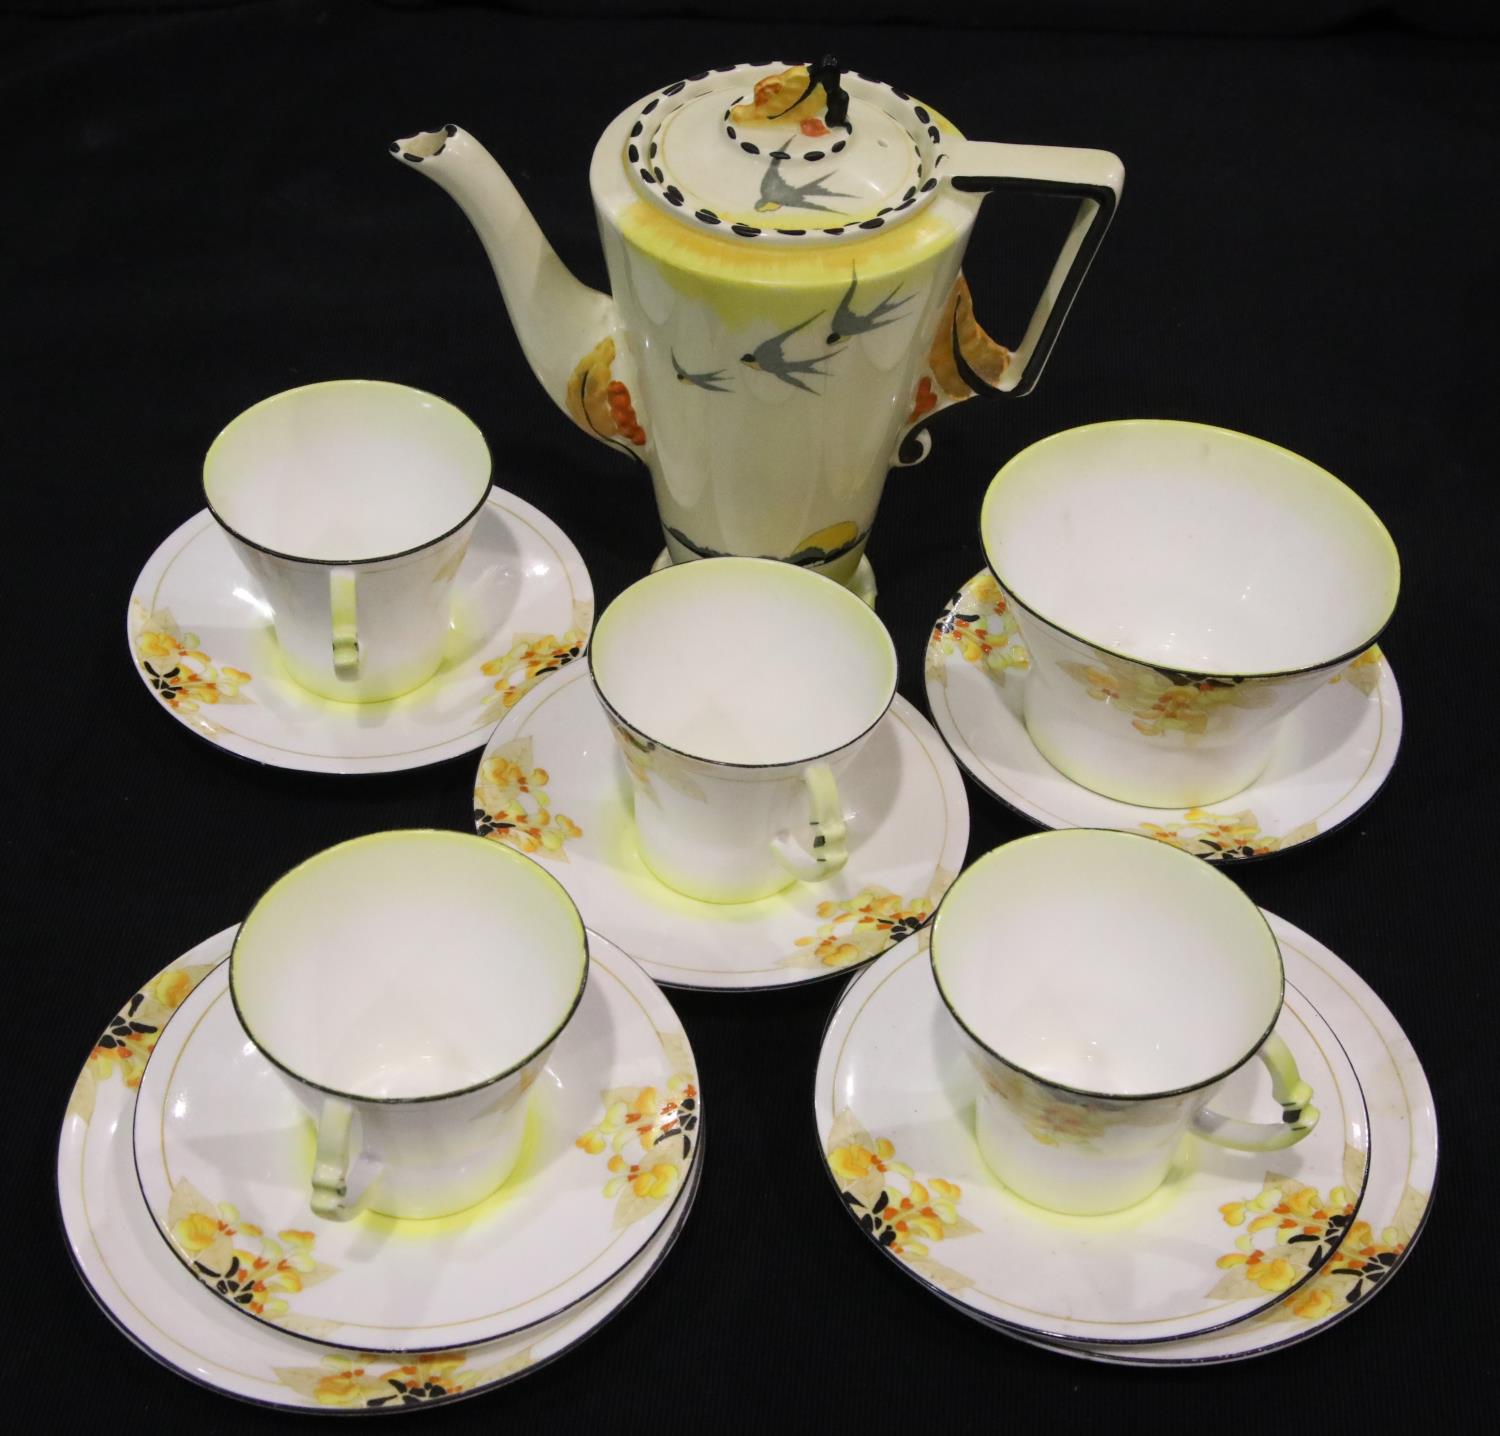 Royal Albert Laburnum pattern part tea service and a Burleigh Ware coffee pot of similar design. P&P